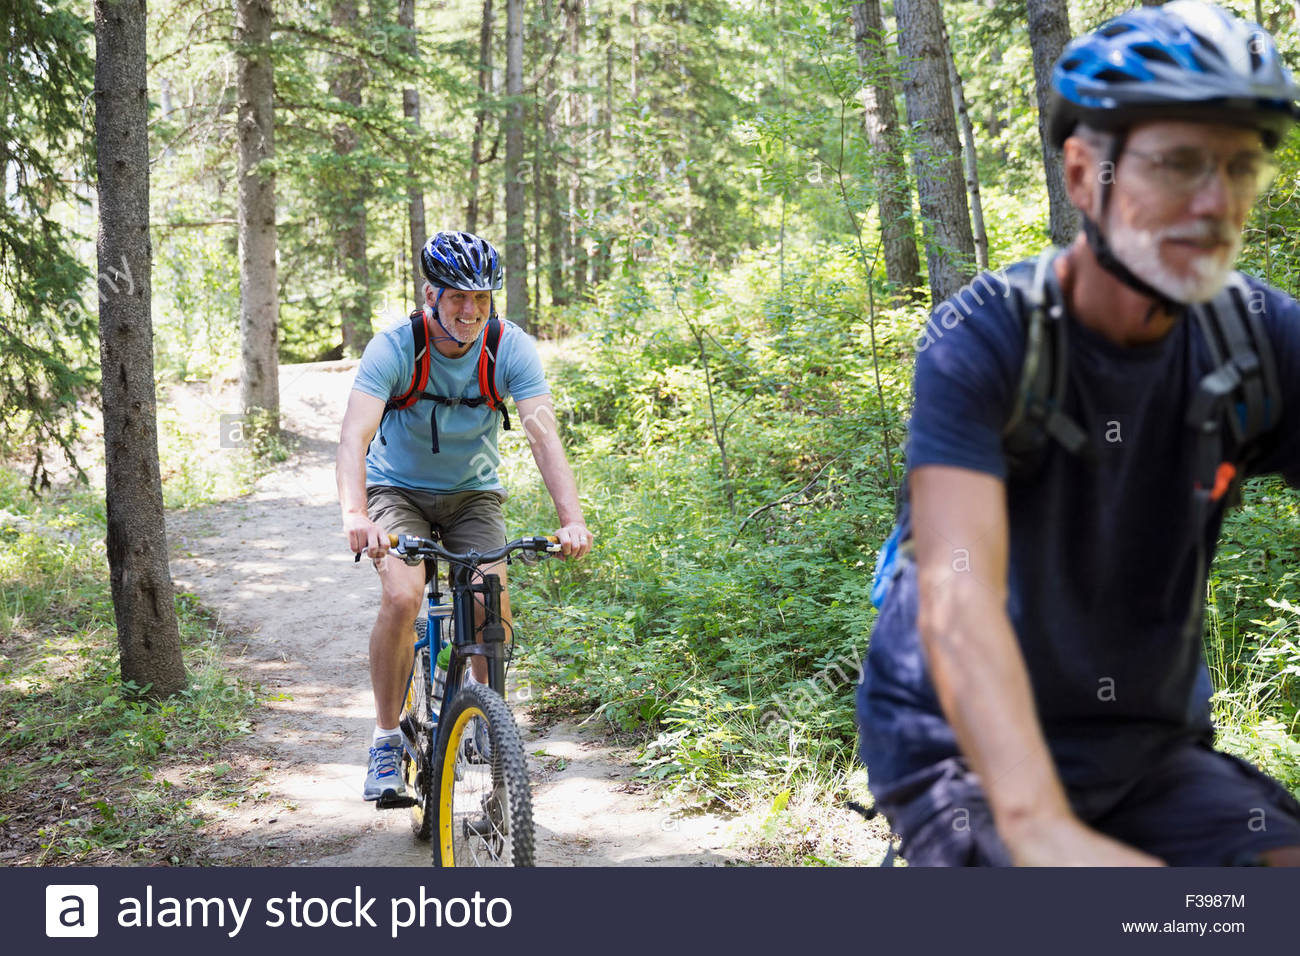 Senior men mountain biking on trail in woods Stock Photo